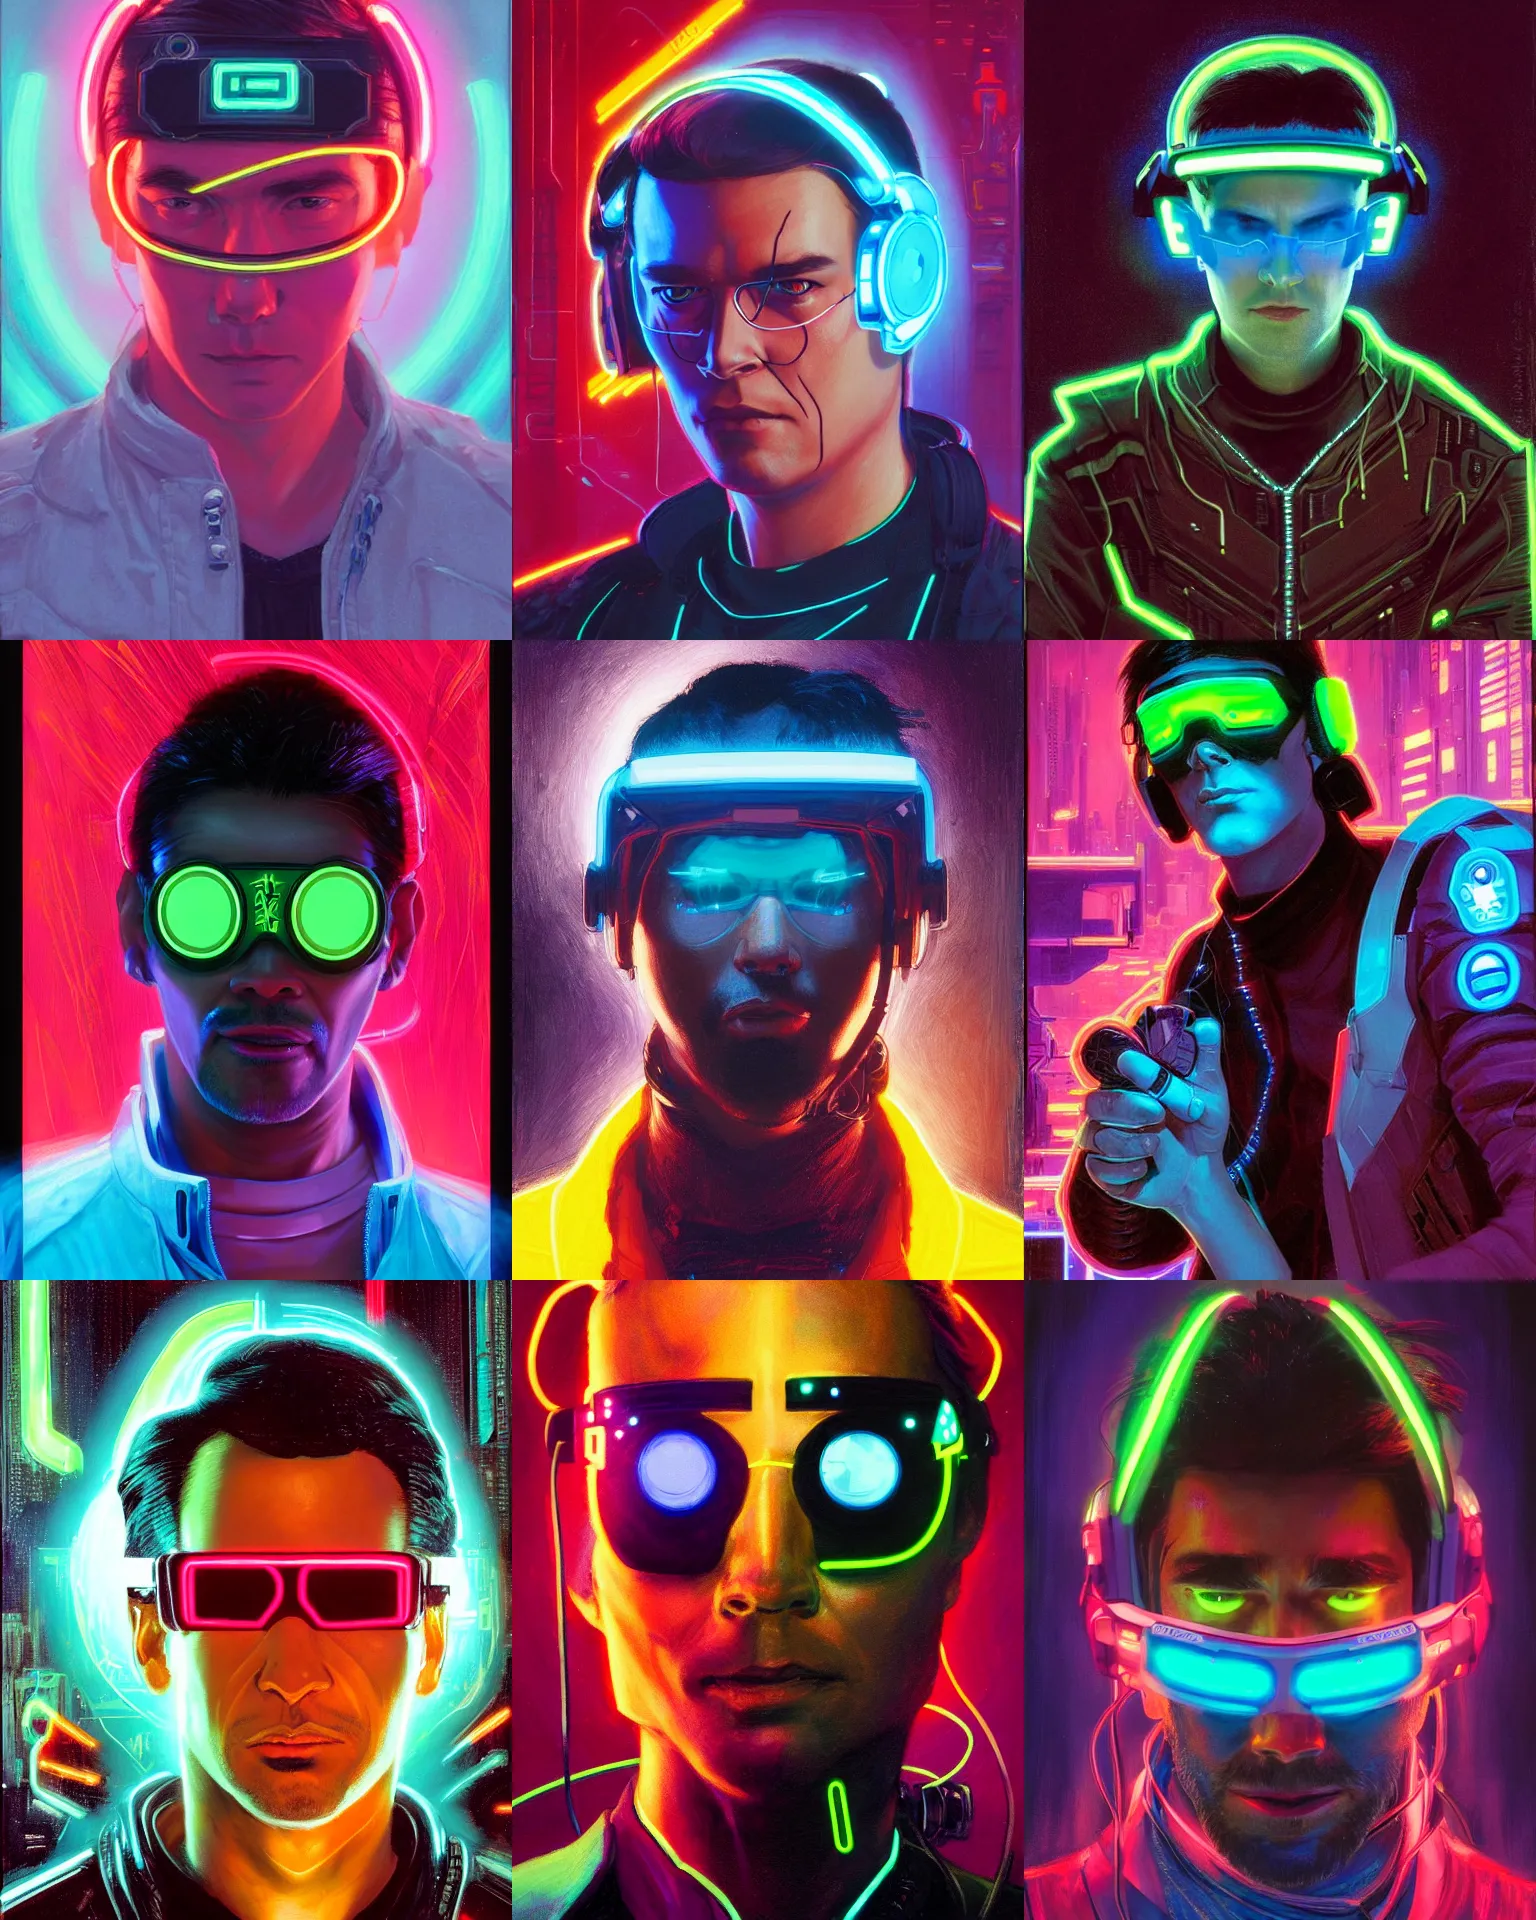 Prompt: neon cyberpunk hacker with glowing geordi visor and headset headshot portrait painting by kilian eng, donato giancola, john berkley, hayao miyazaki, j. c. leyendecker, mead schaeffer fashion photography